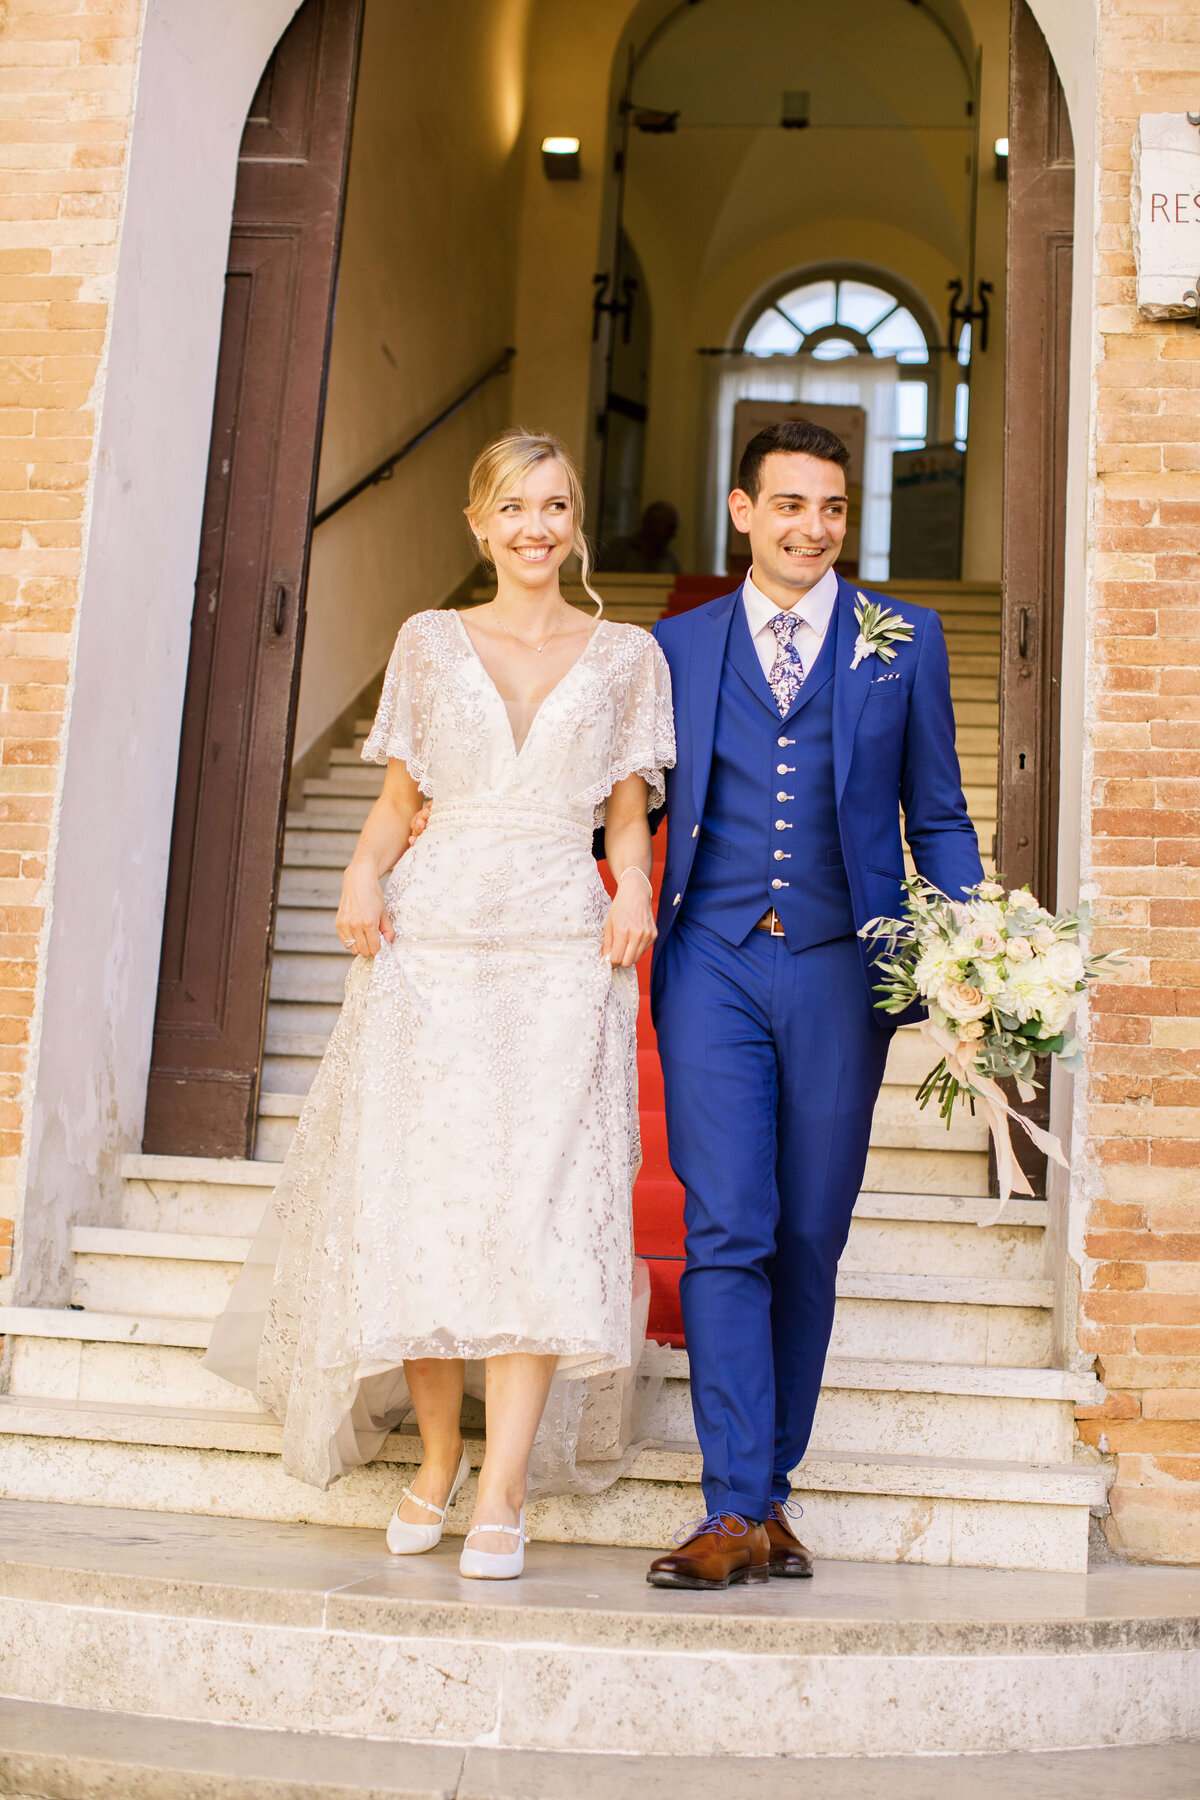 Wedding C&B - Umbria - Italy 2019 18